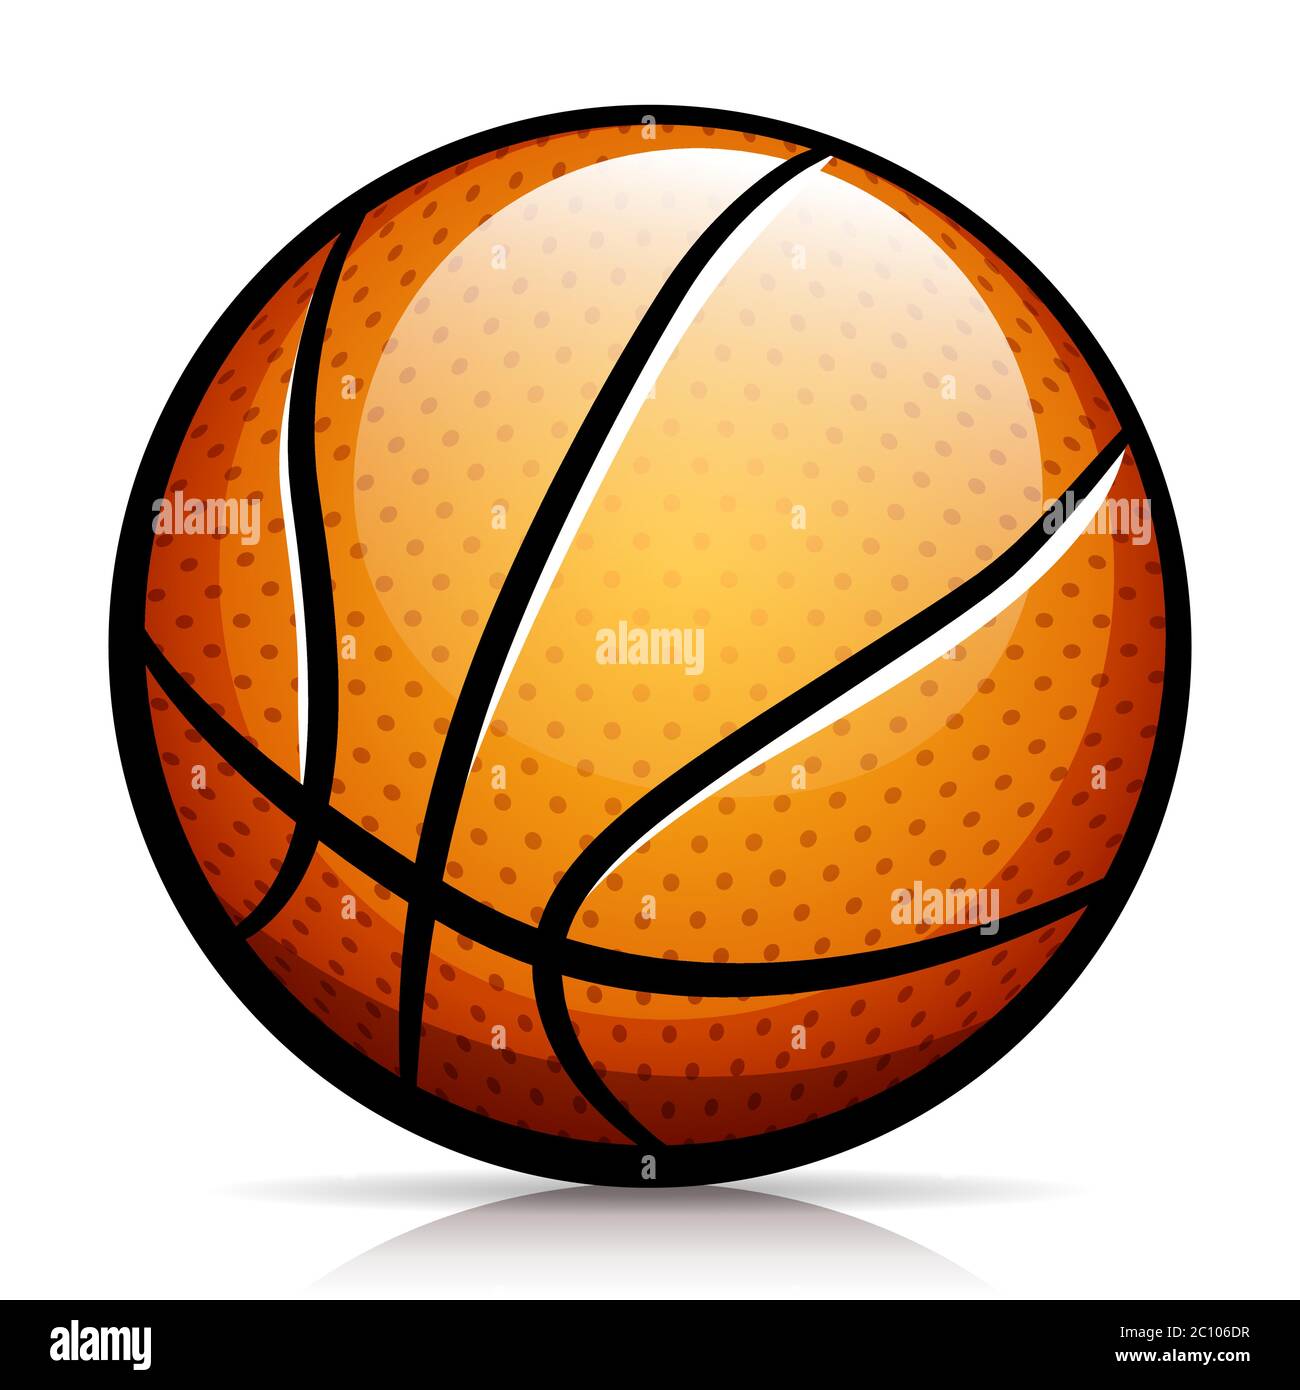 Basquetbol pelota Imágenes vectoriales de stock - Alamy